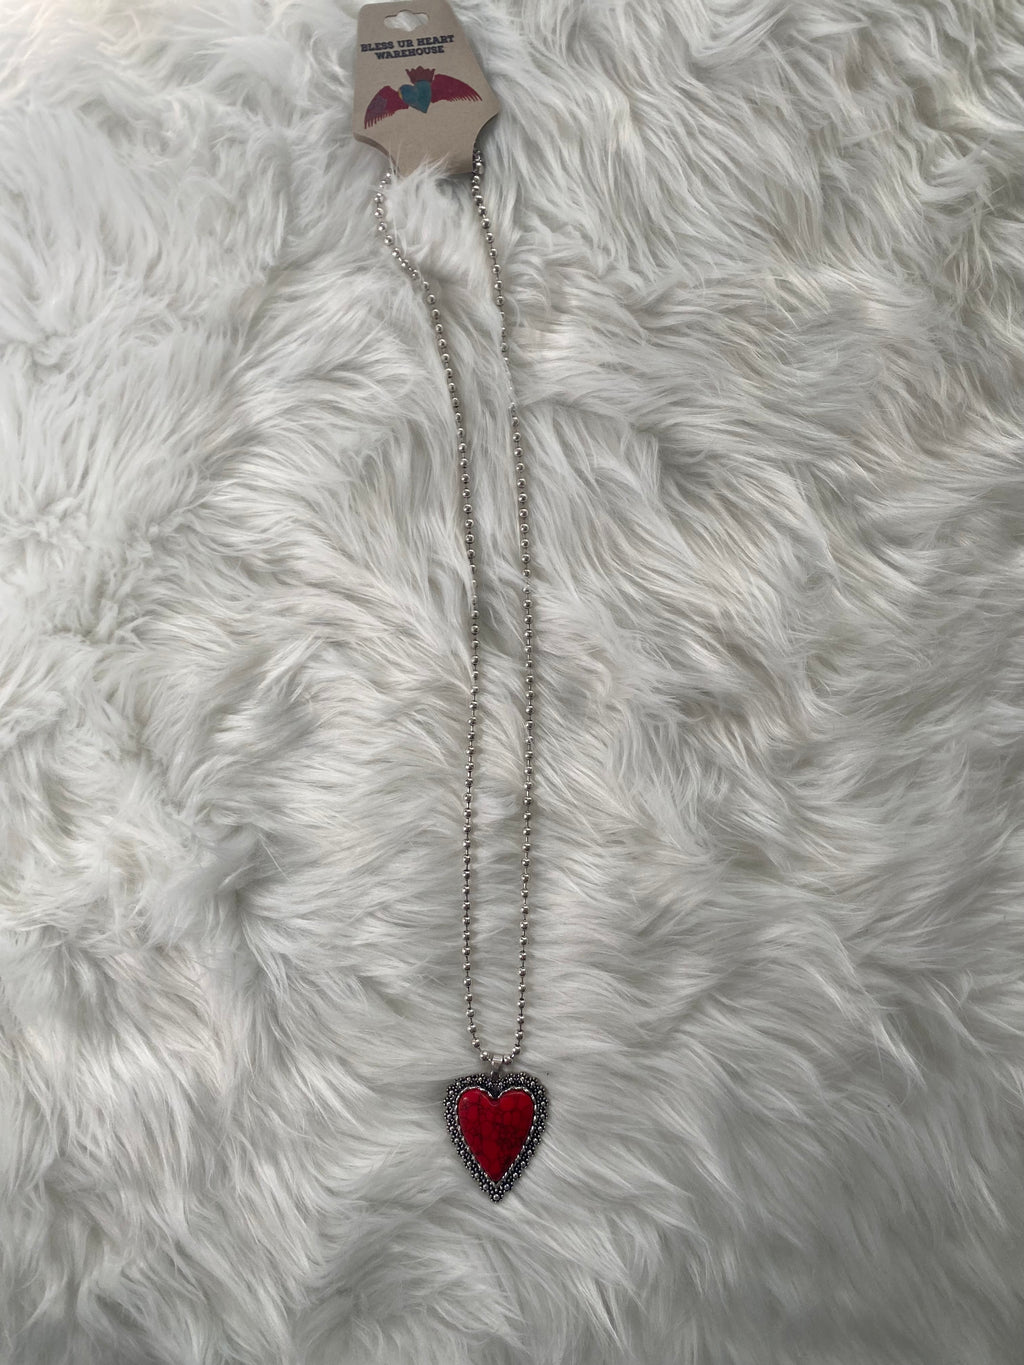 Vintage Red Heart Necklace Nck1401